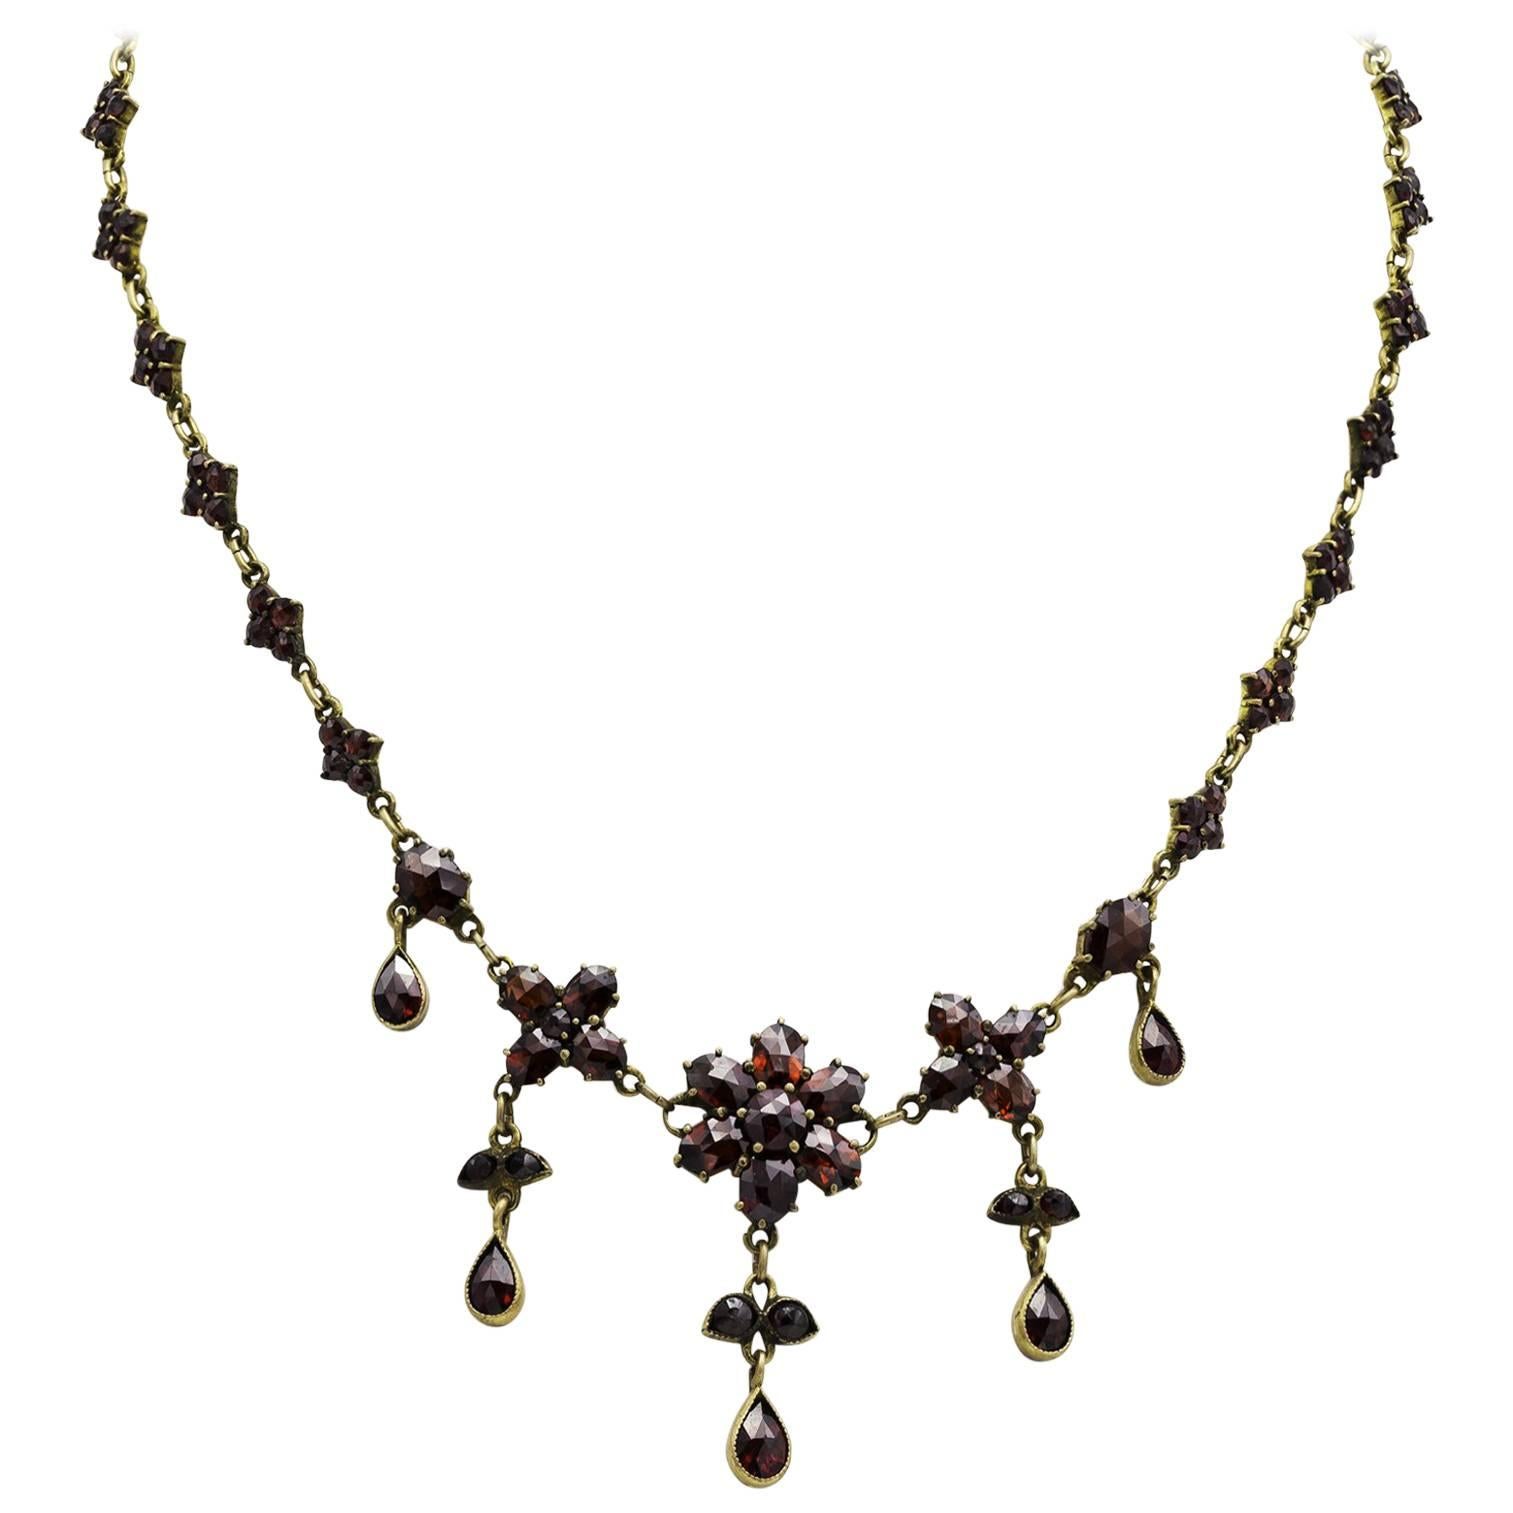 Victorian Garnet Necklace in a Floral Design with Tear Drop Briolettes